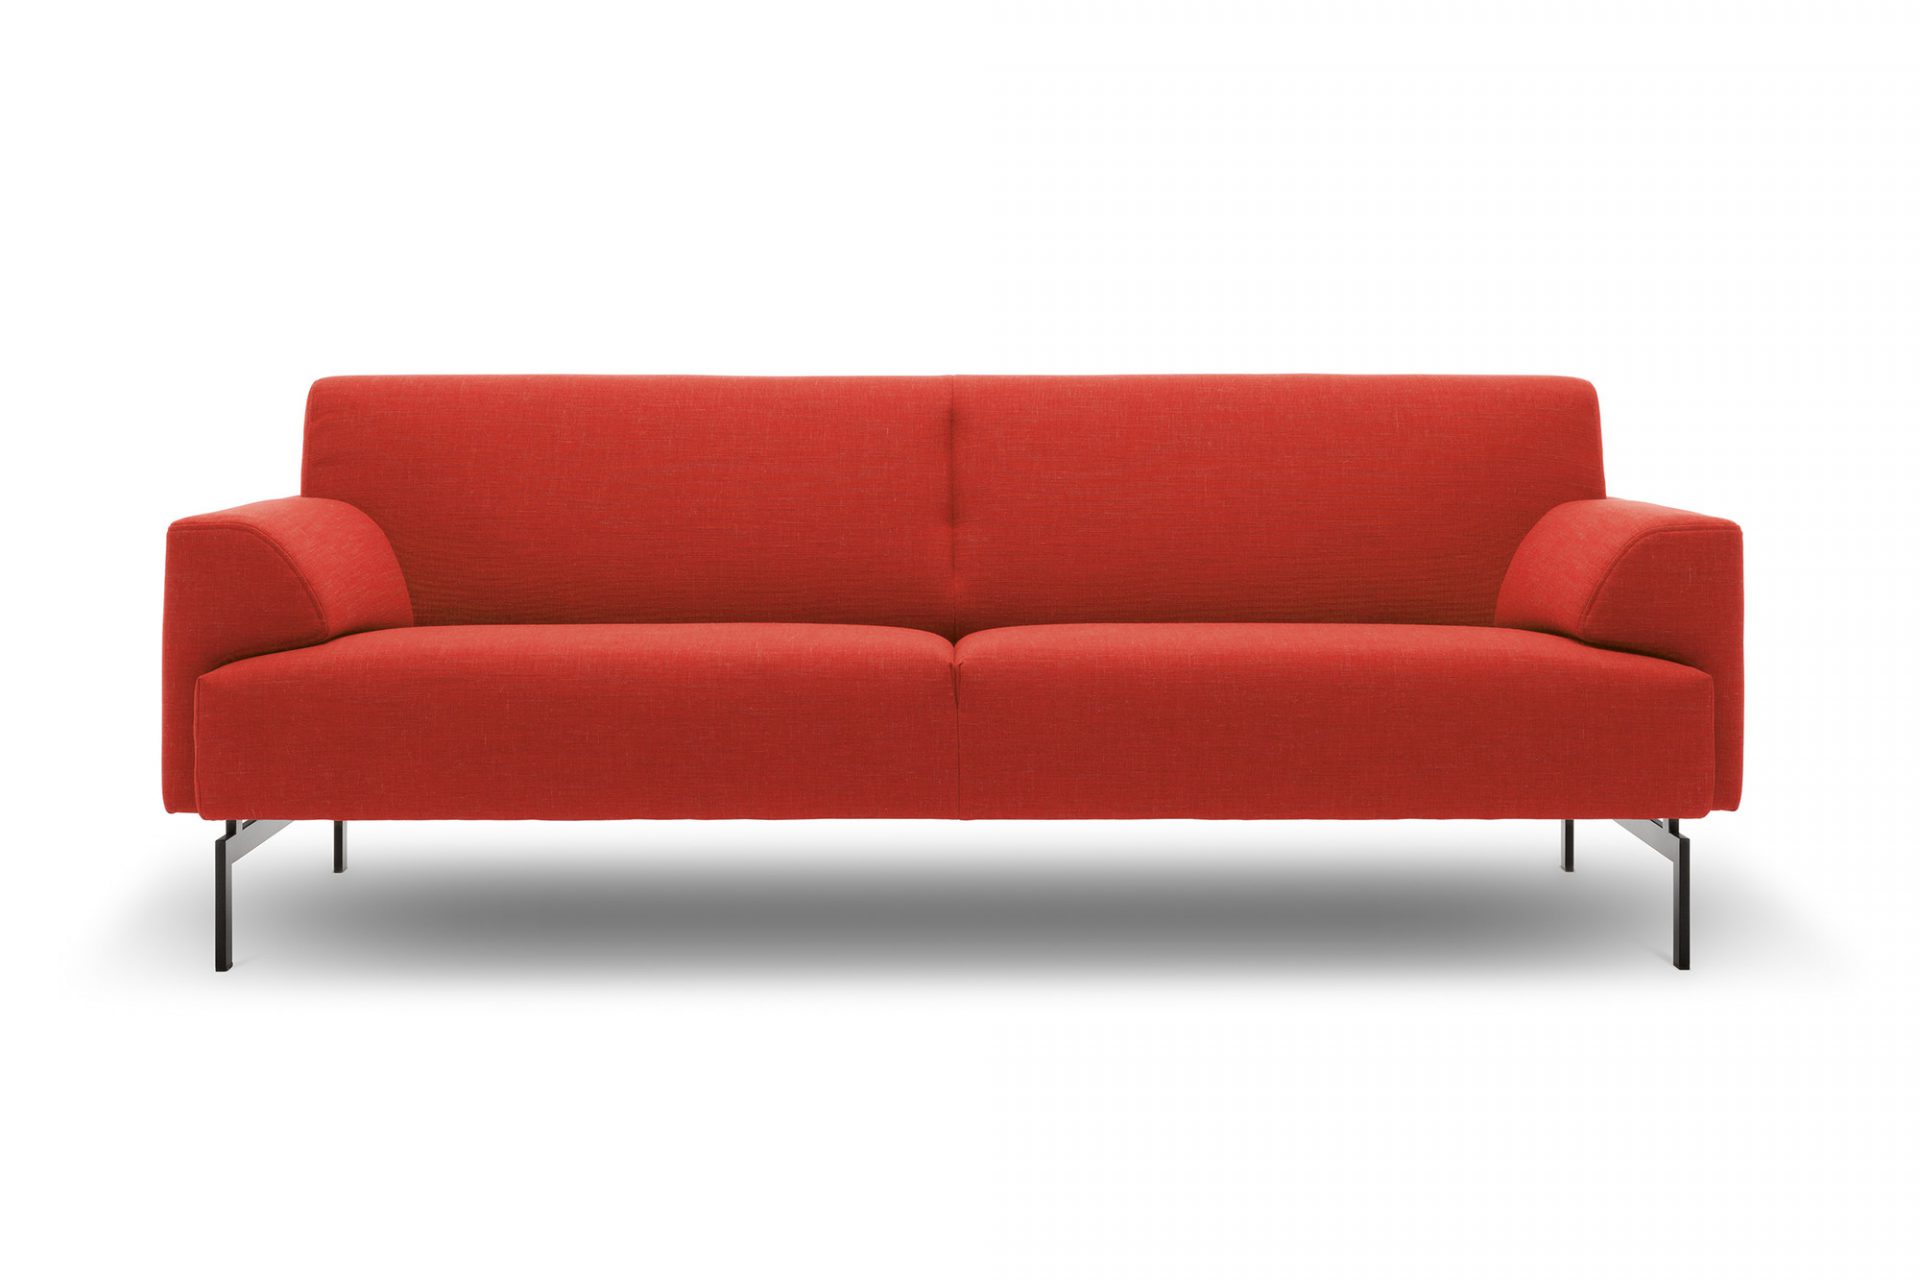 Rolf Benz 310 sofa